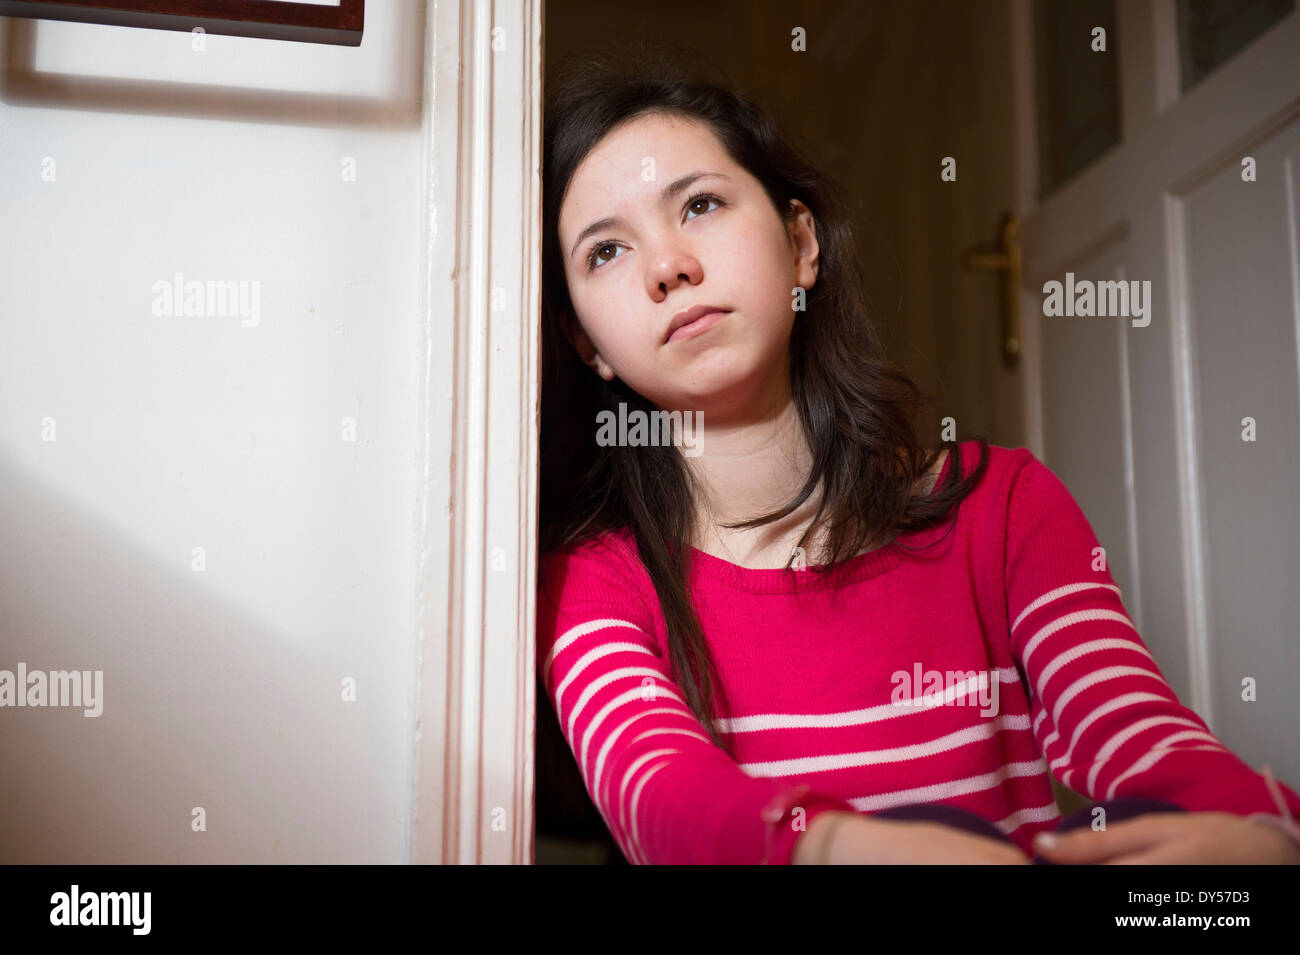 Girl leaning against doorway Stock Photo